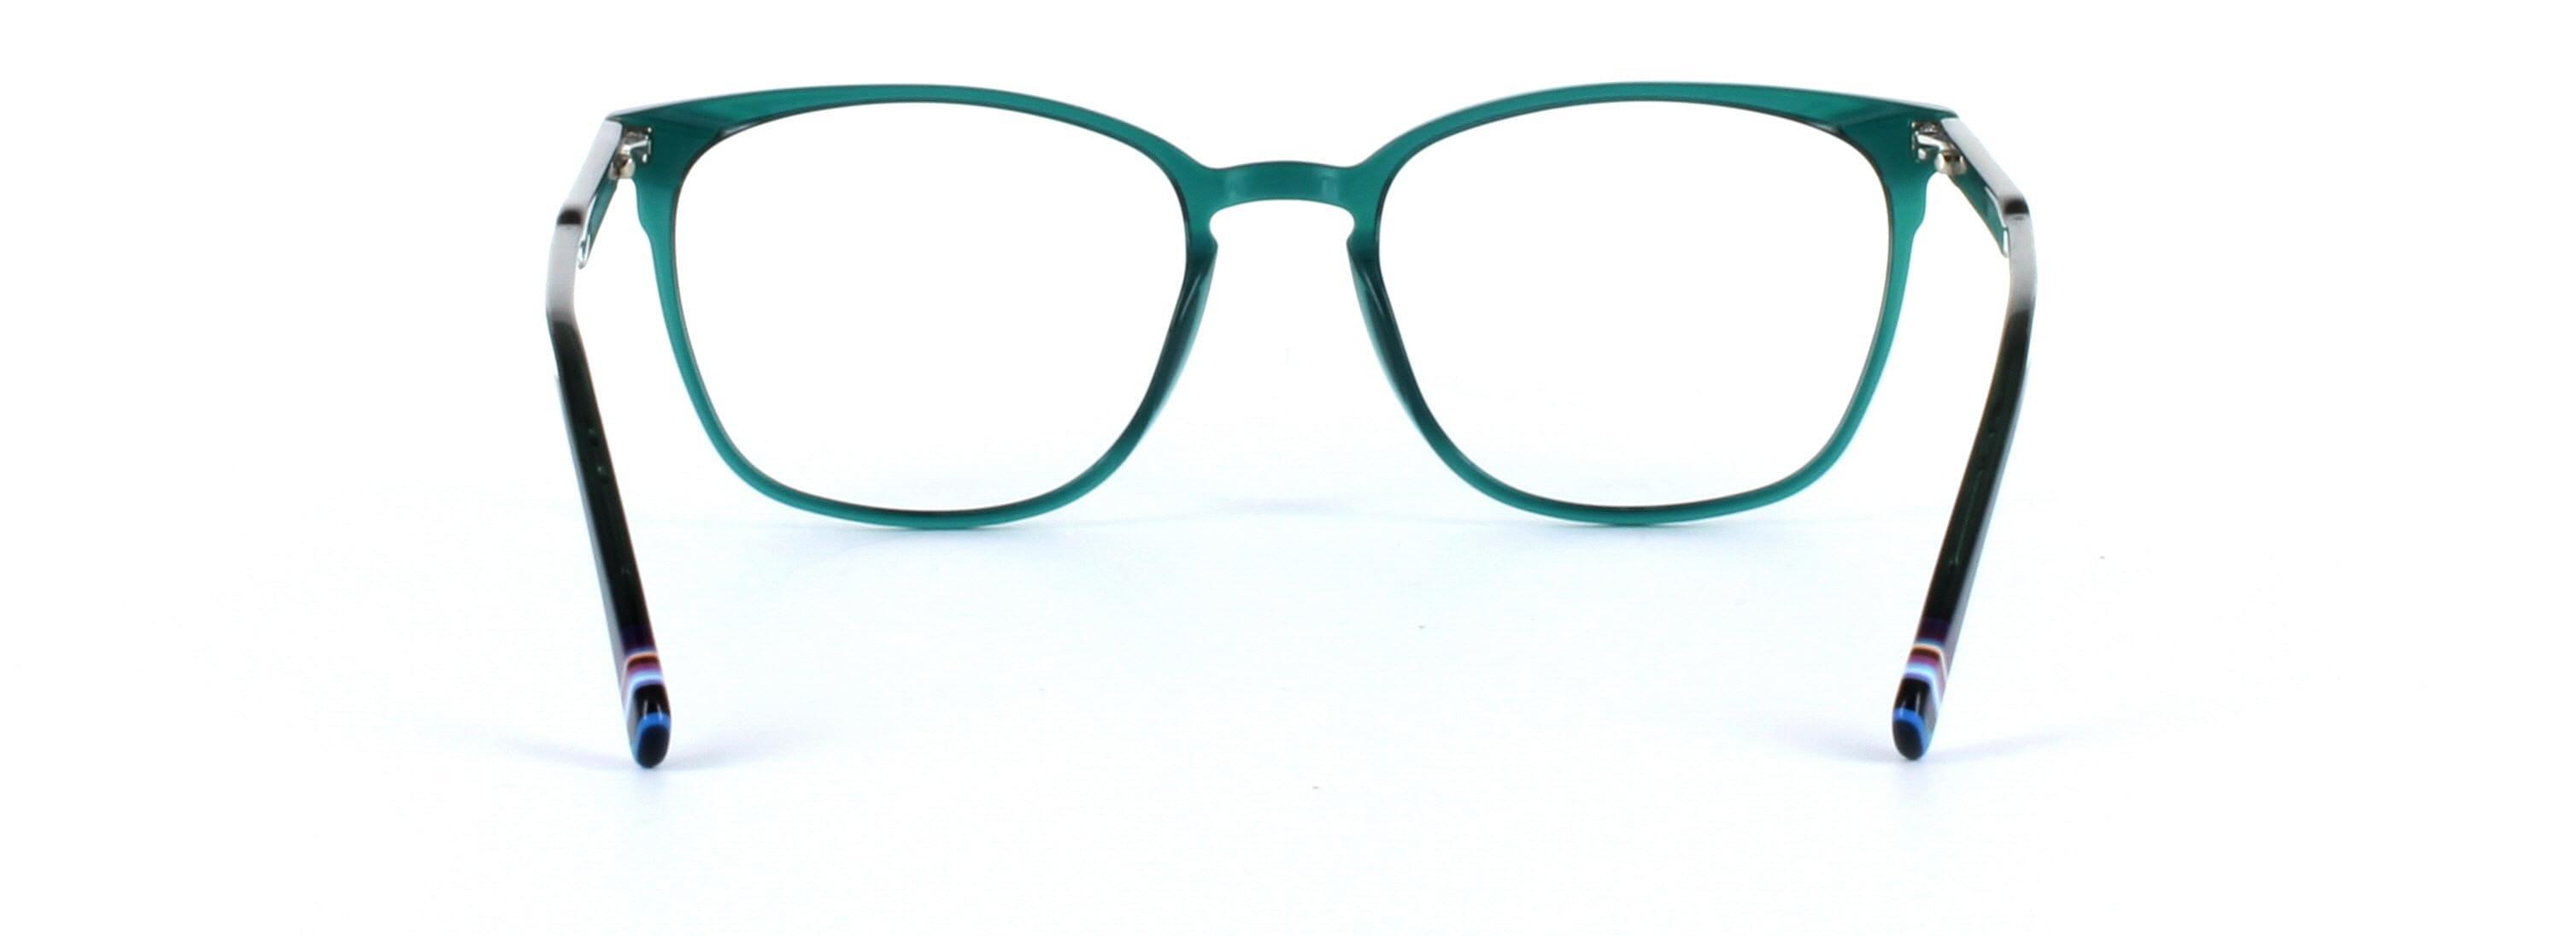 Astley Turquoise Full Rim Round Acetate Glasses - Image View 3